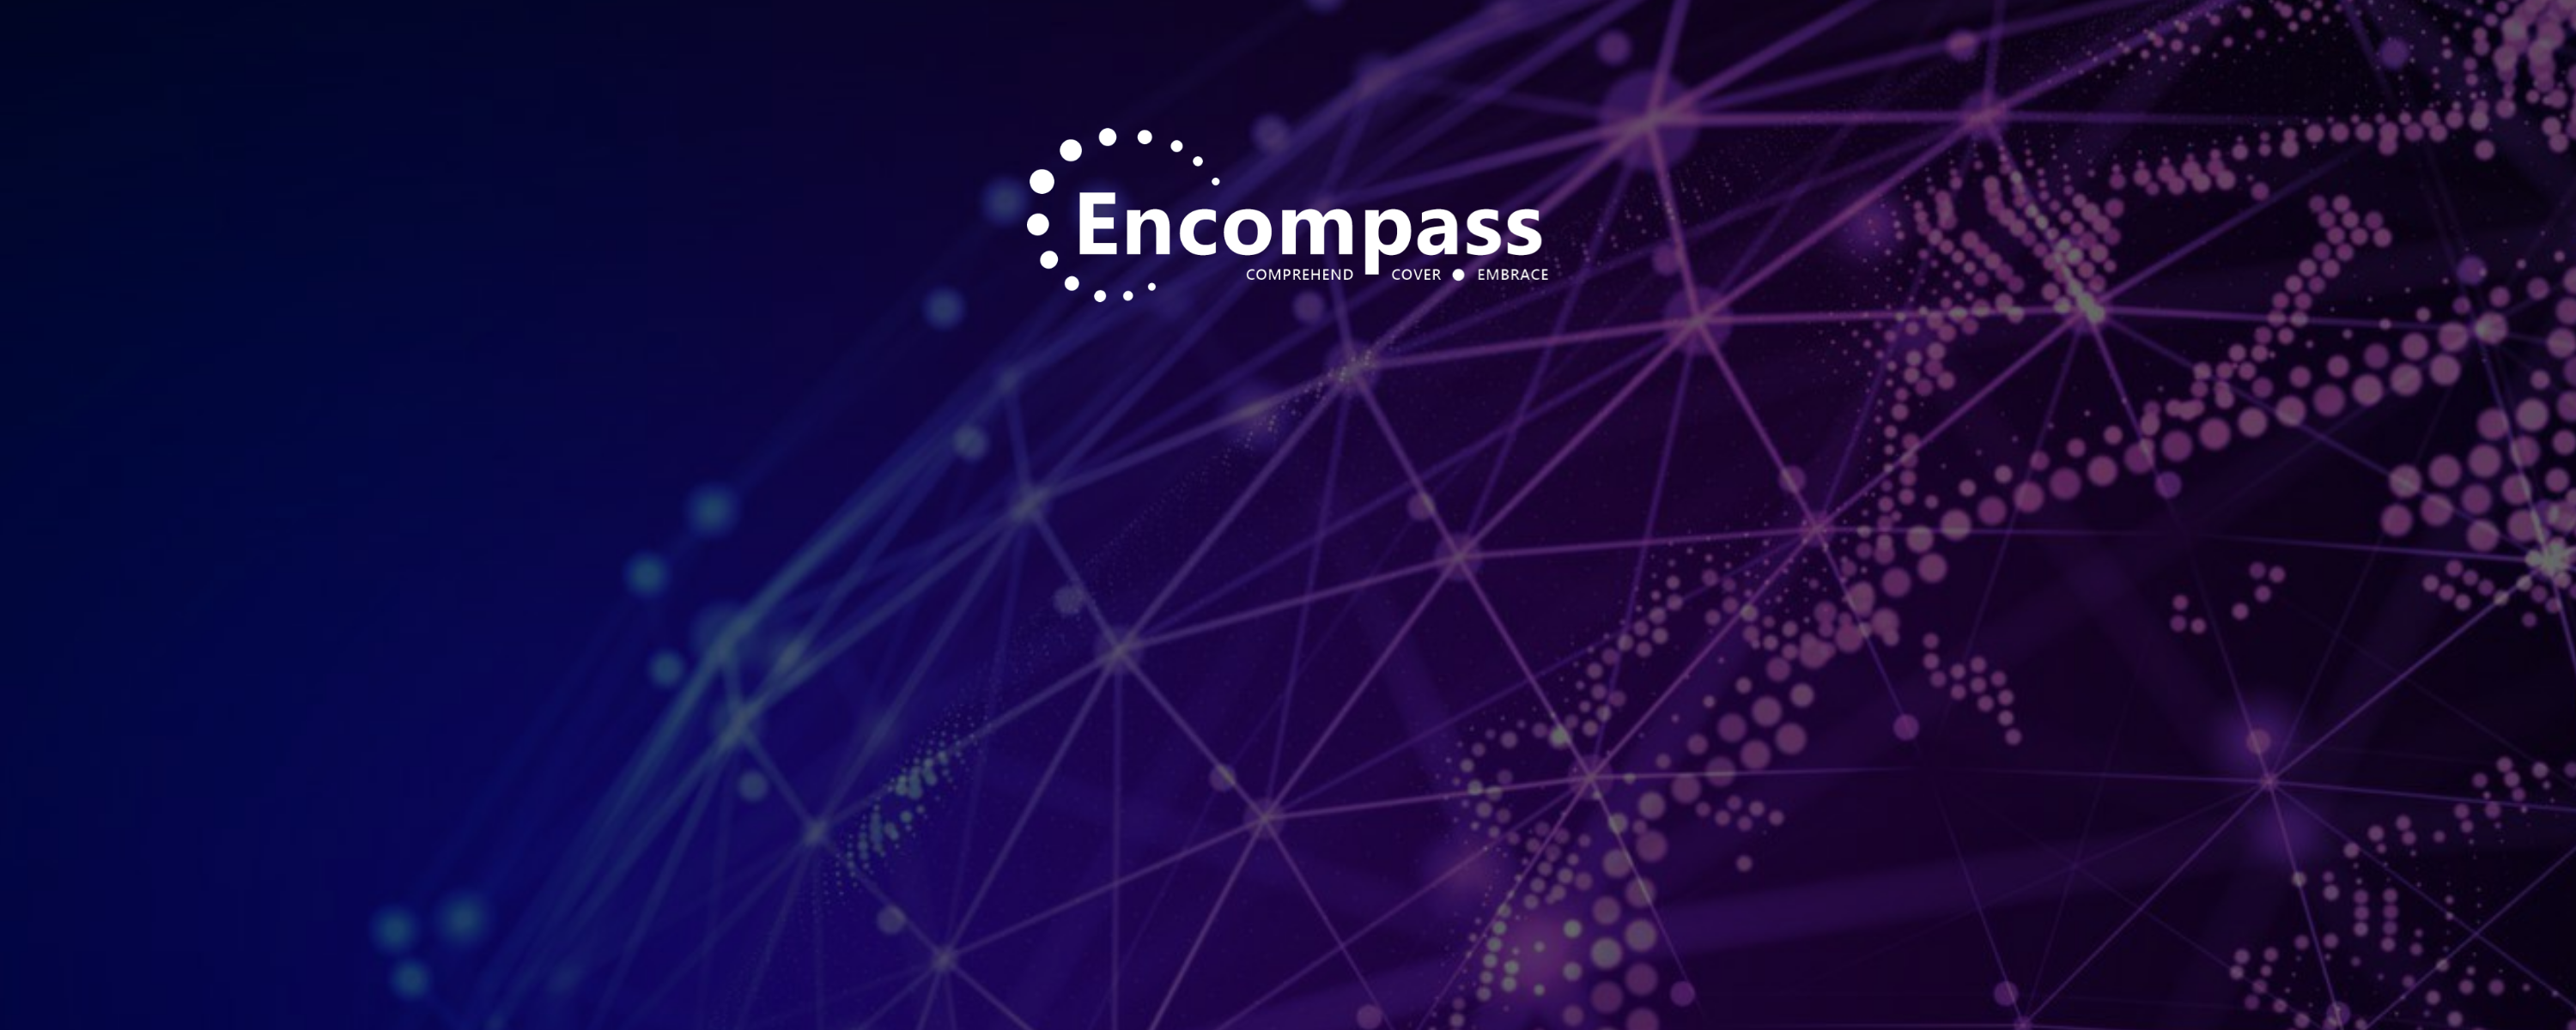 Encompass-Banner (2)